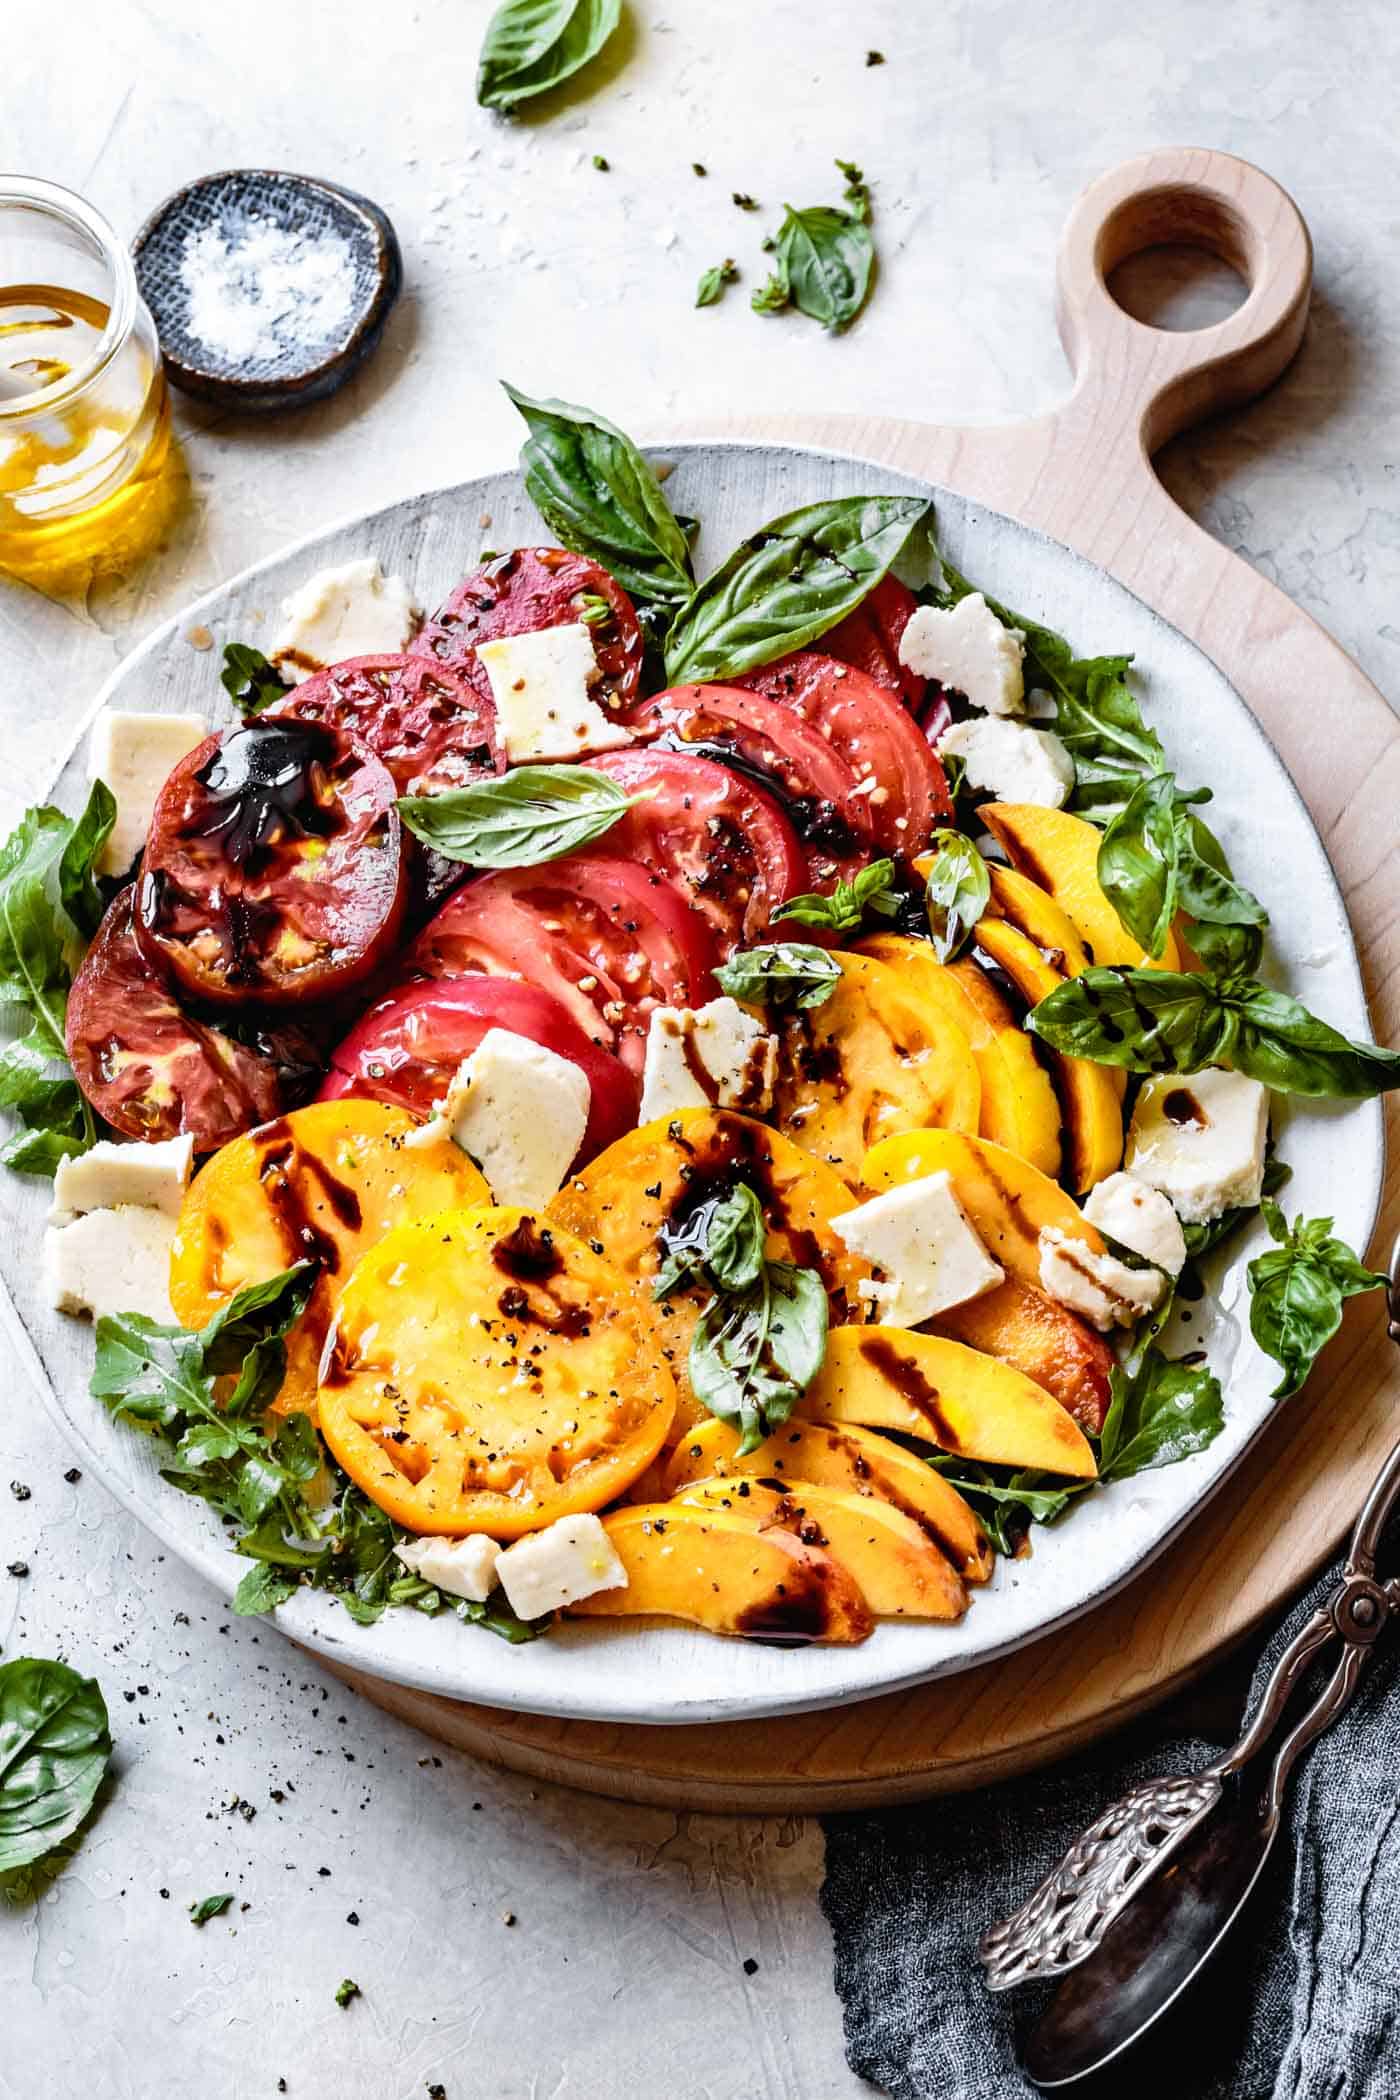 Alternate view of vegan peach caprese salad with arugula on a platter